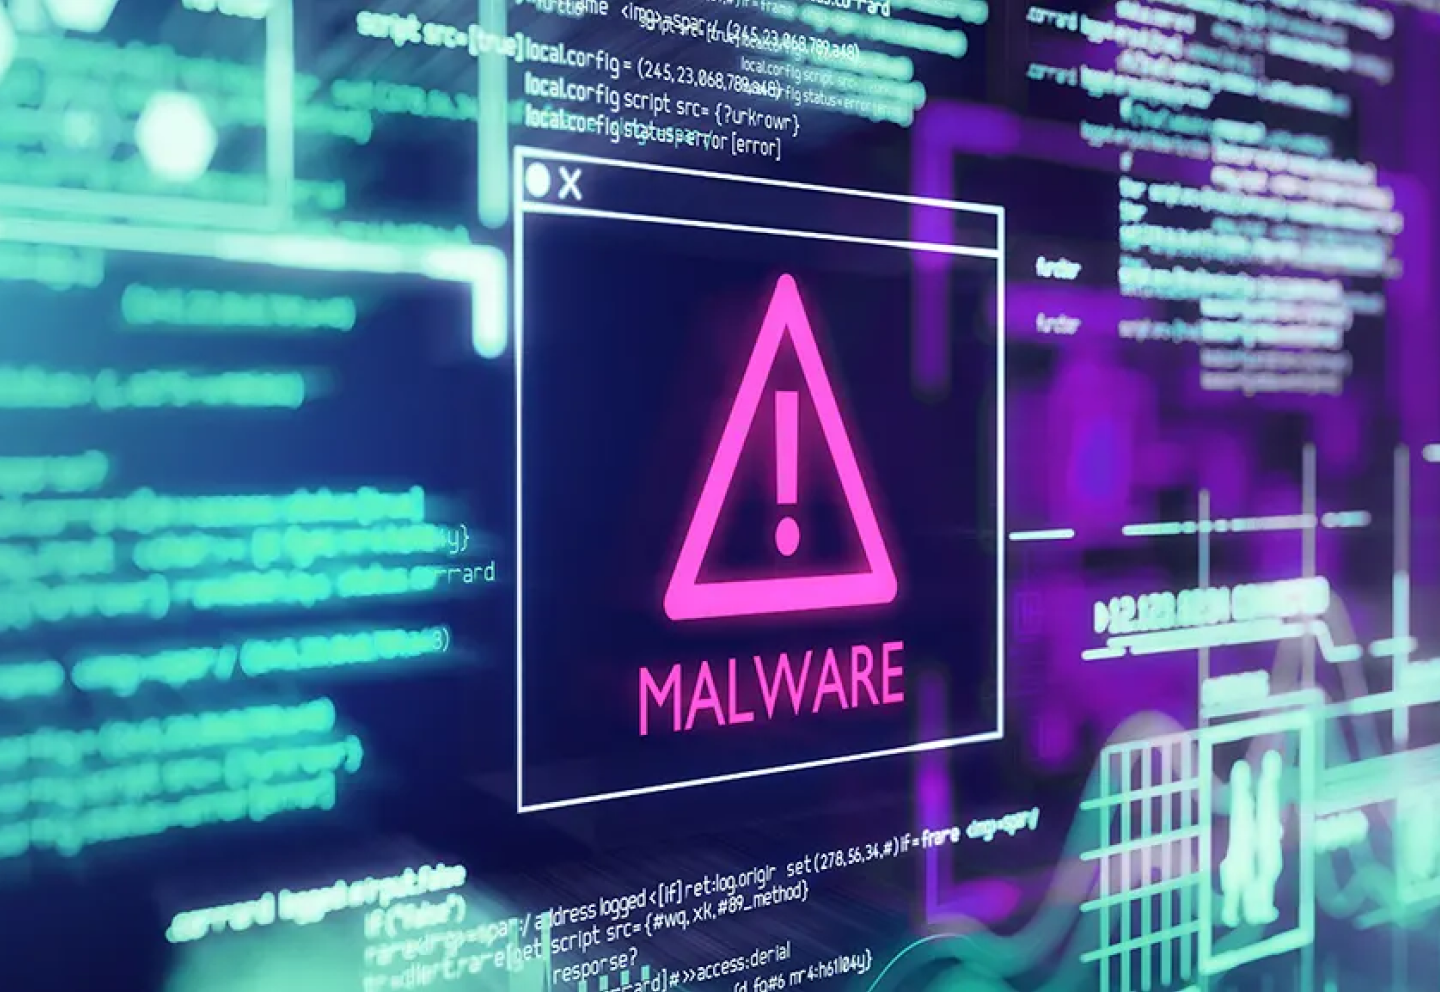 A malware symbol on a computer screen